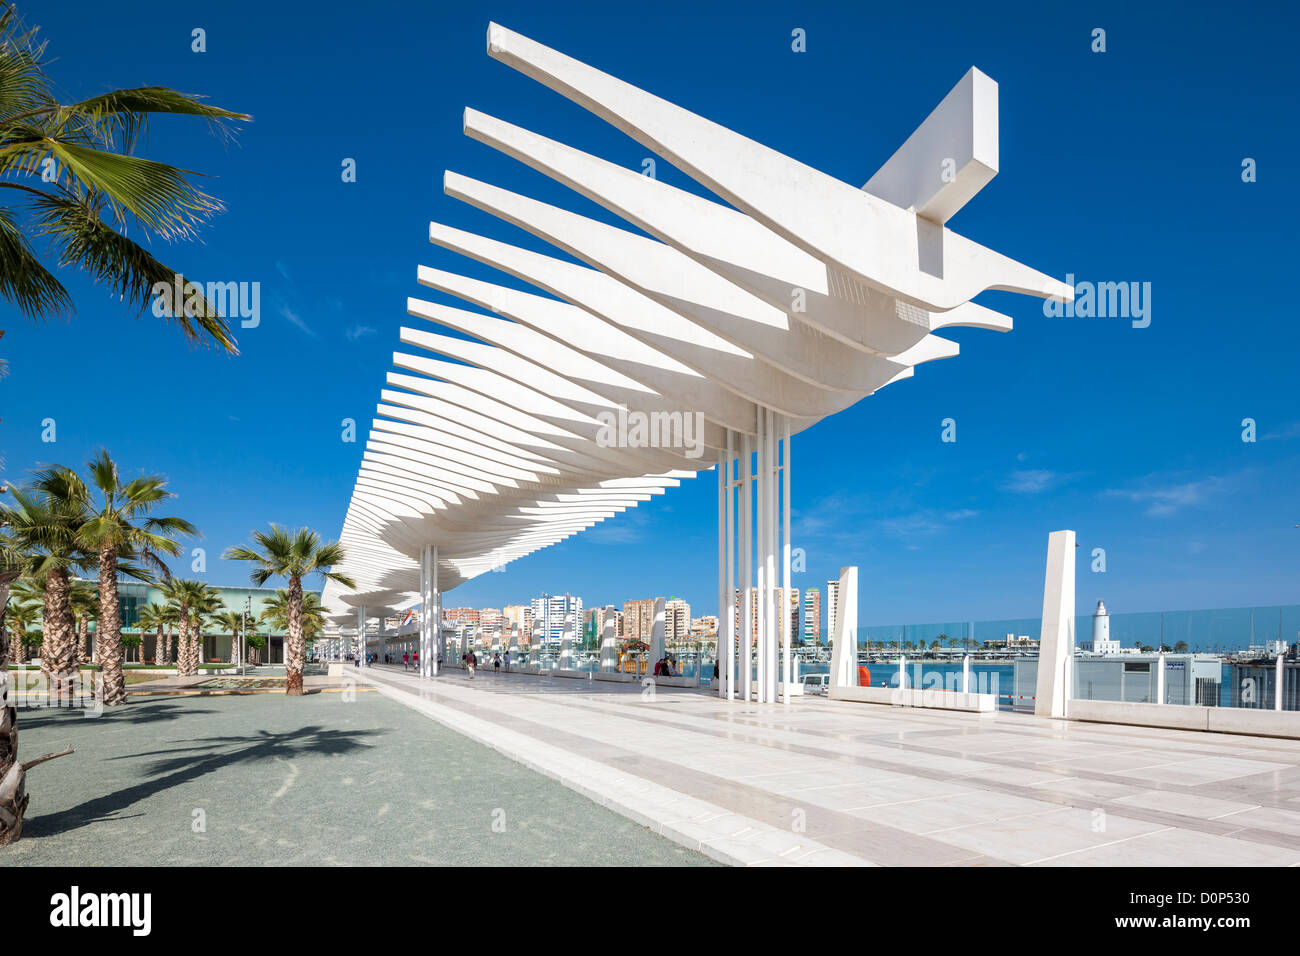 Malaga espagne Modern new cruise terminal. Port maritime harbour promenade boulevard El Palmeral de las Sorpresas. Deux quai 2 Banque D'Images